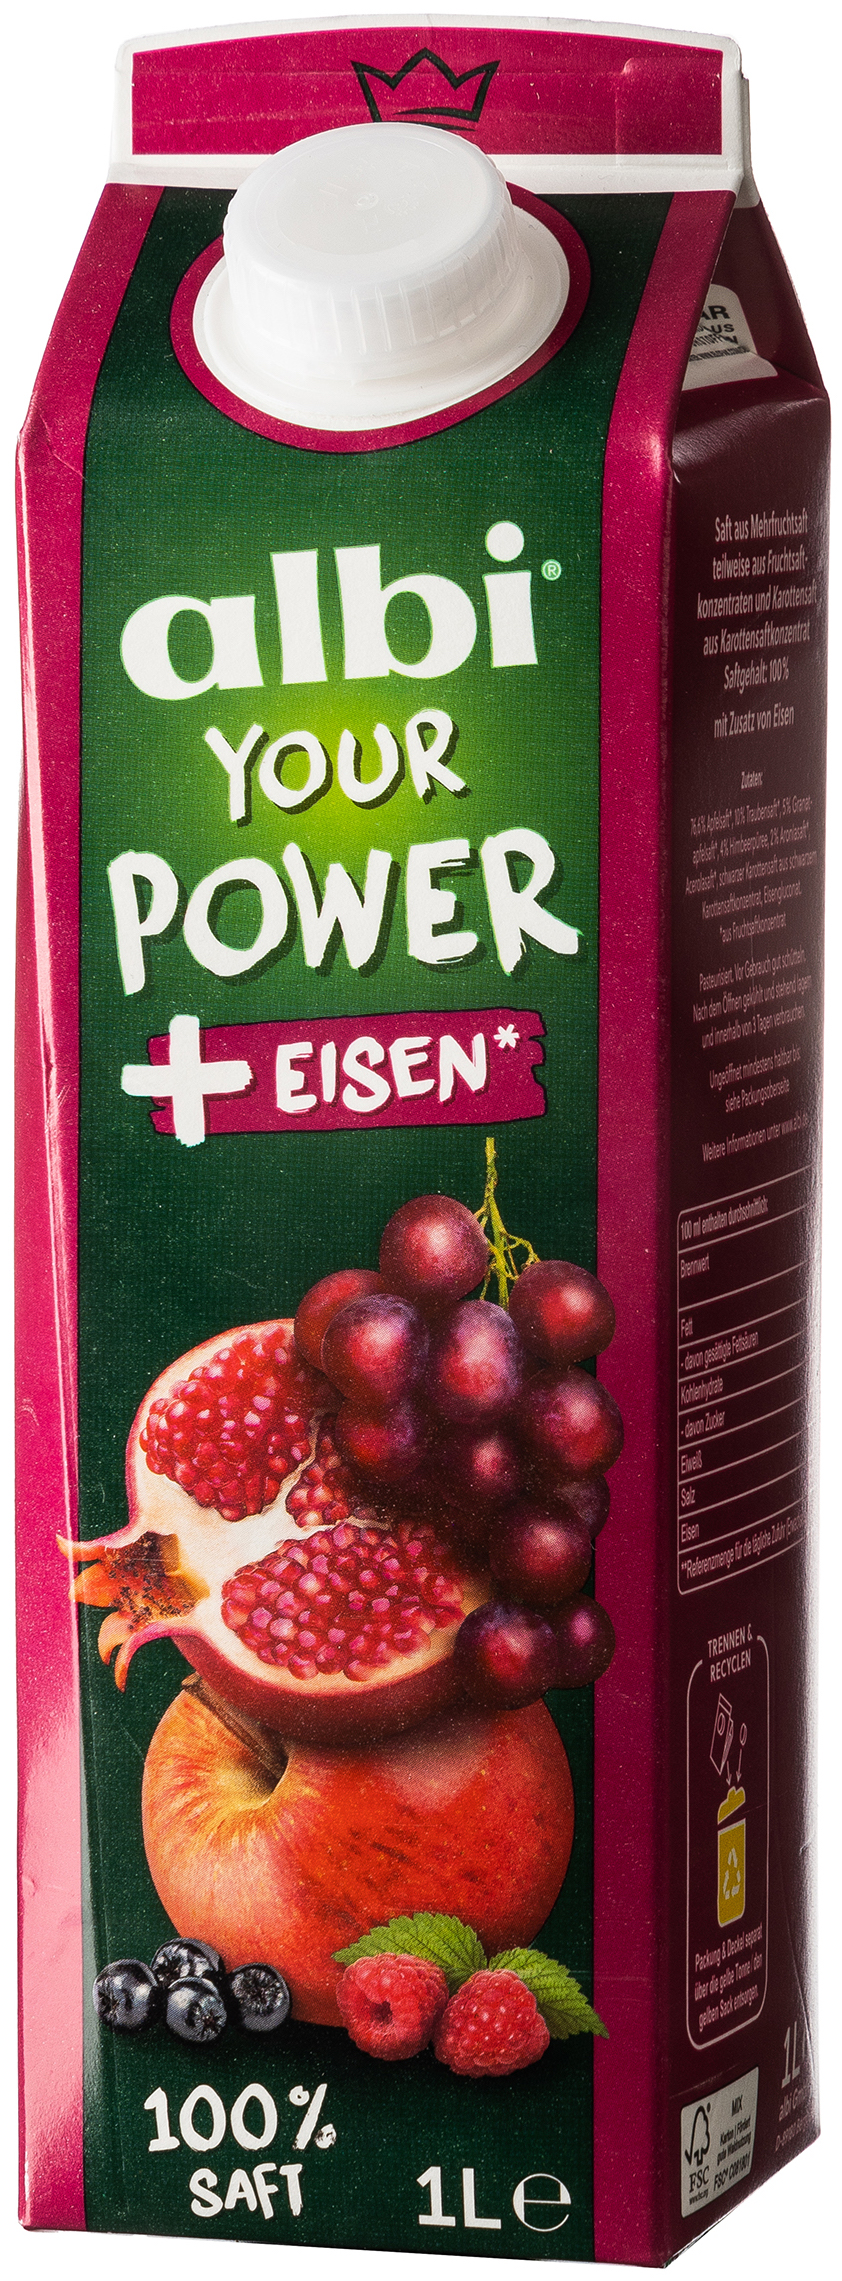 albi your power - Plus Eisen 1,0L